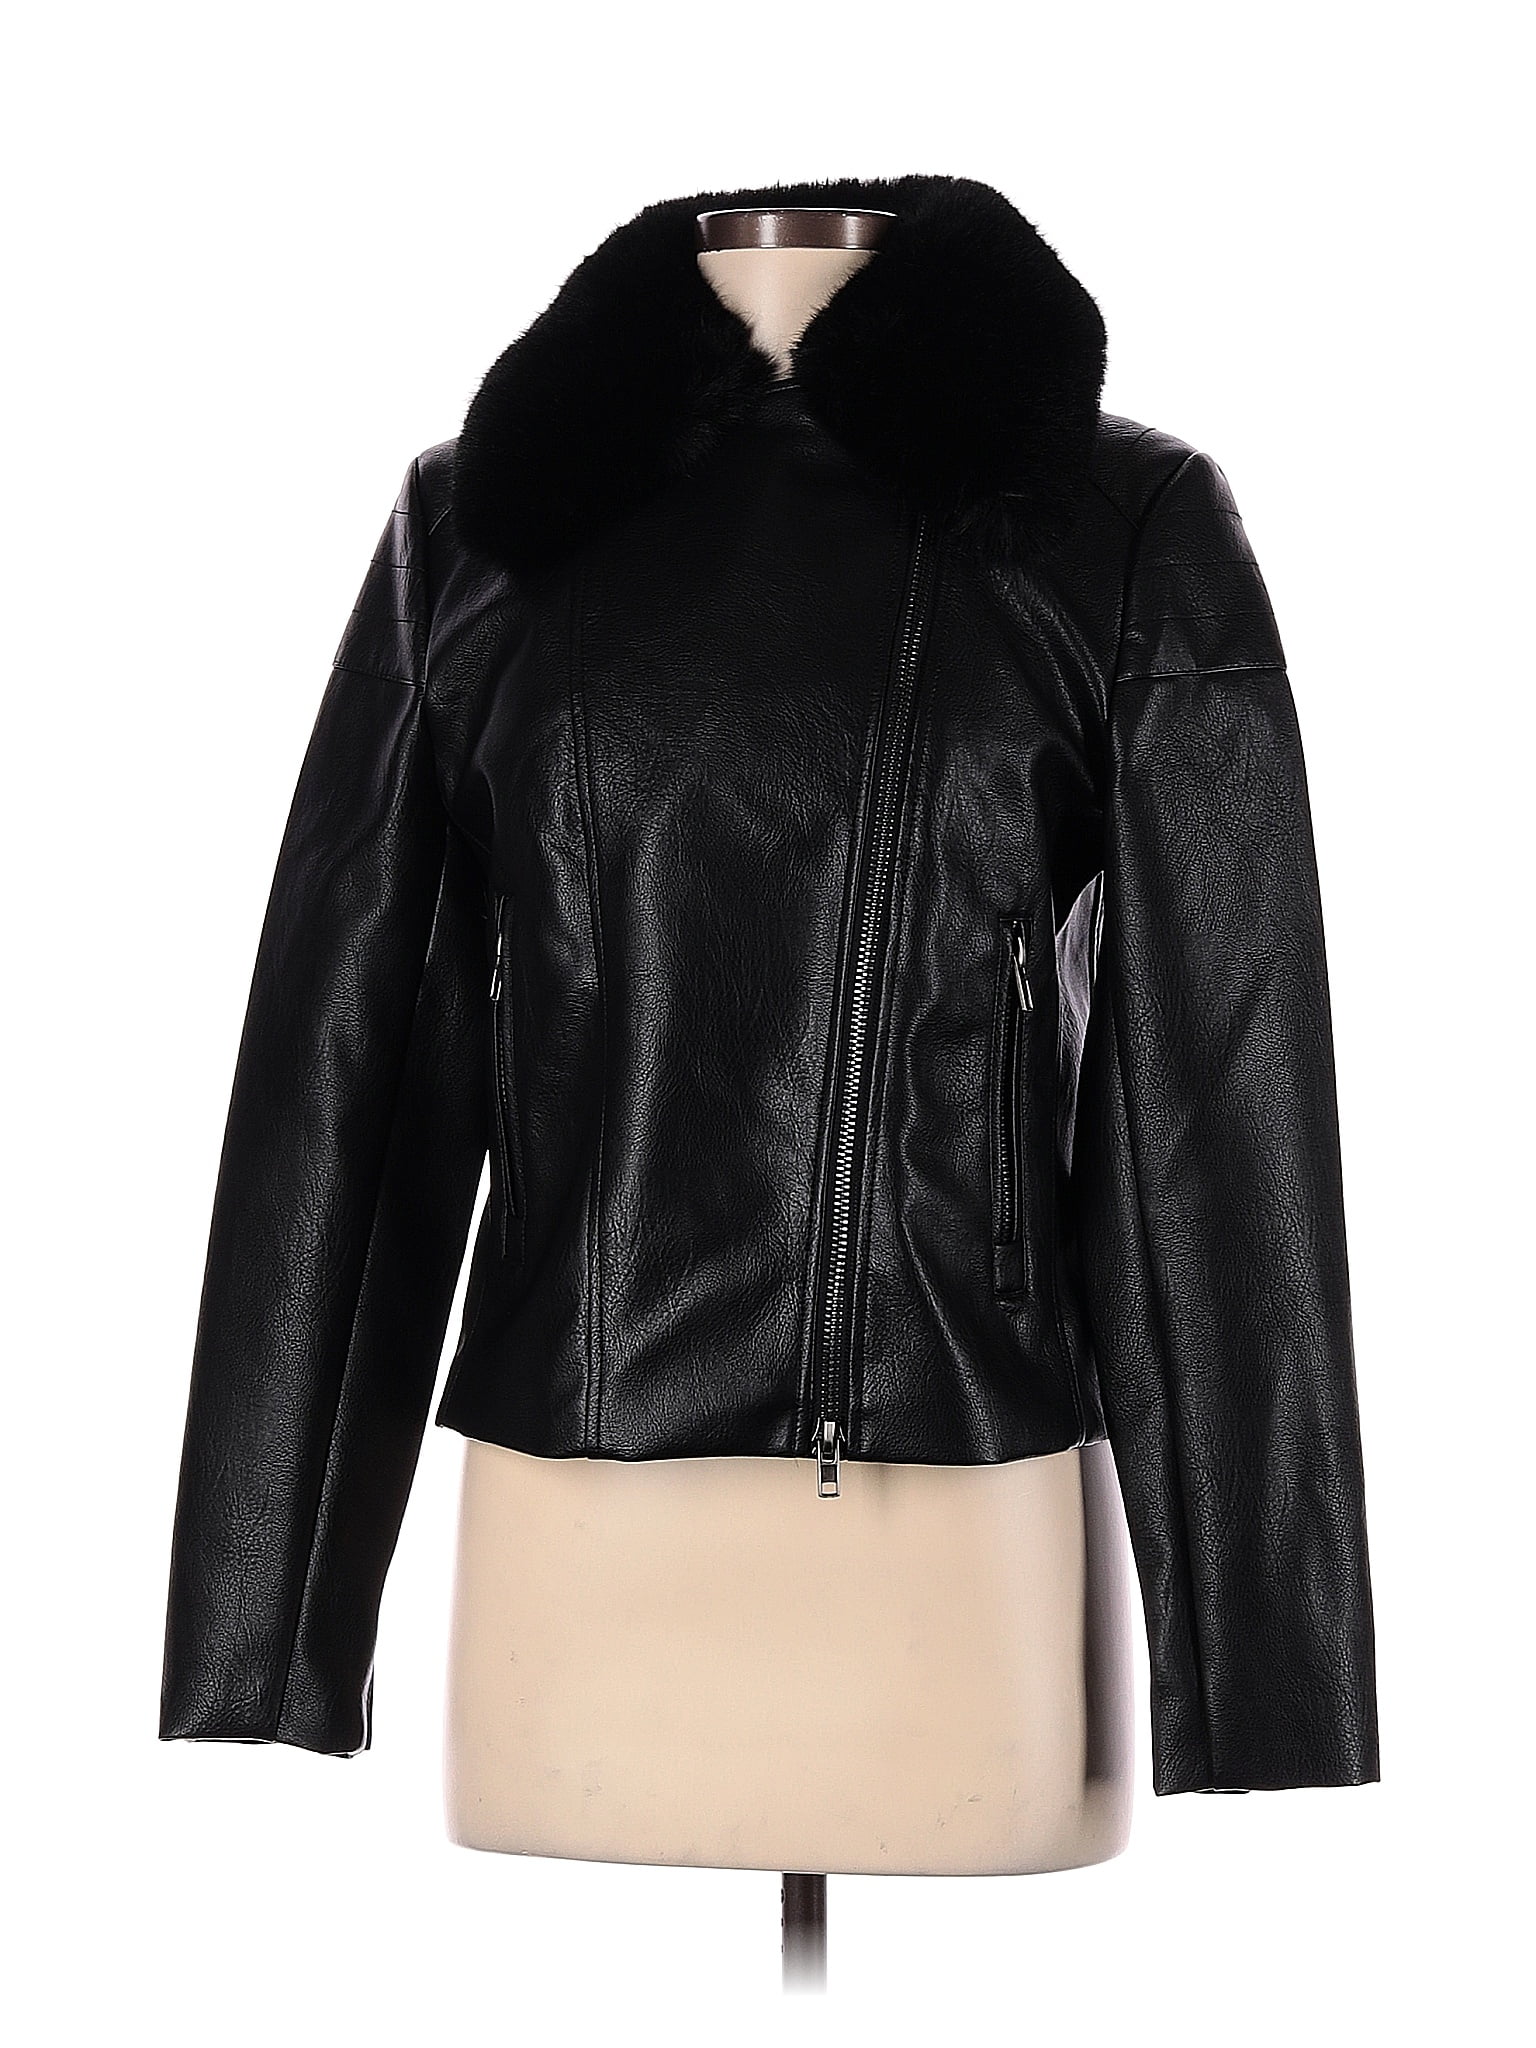 T Tahari 100% Polyurethane Solid Black Faux Leather Jacket Size M - 74% ...